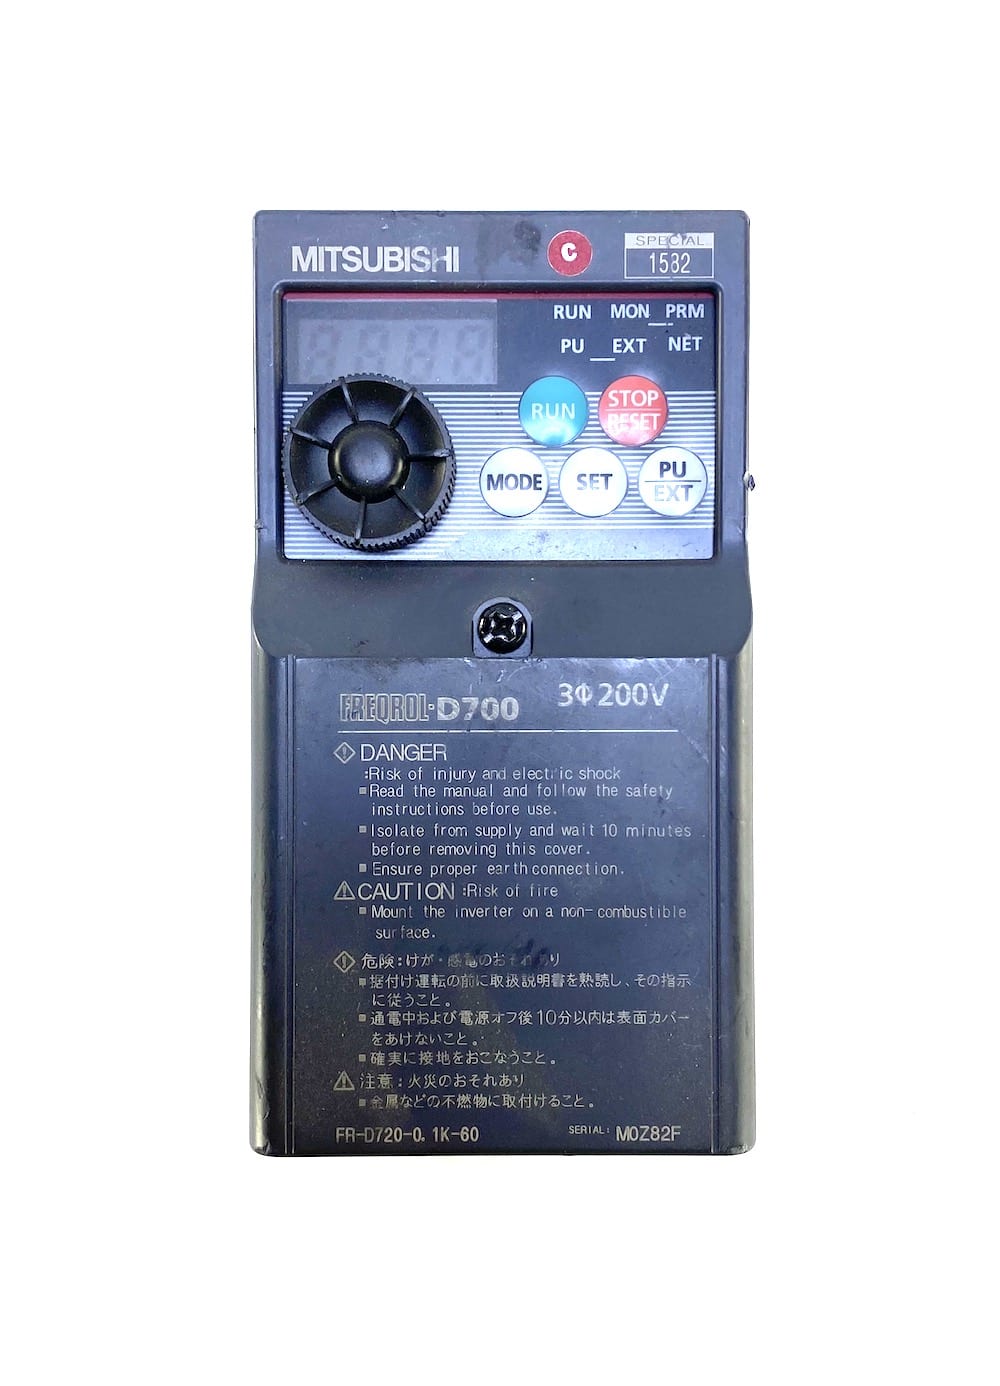 Mitsubishi Electric FR-D720-0.1K-60 3 Phase 240 Vac Inverter